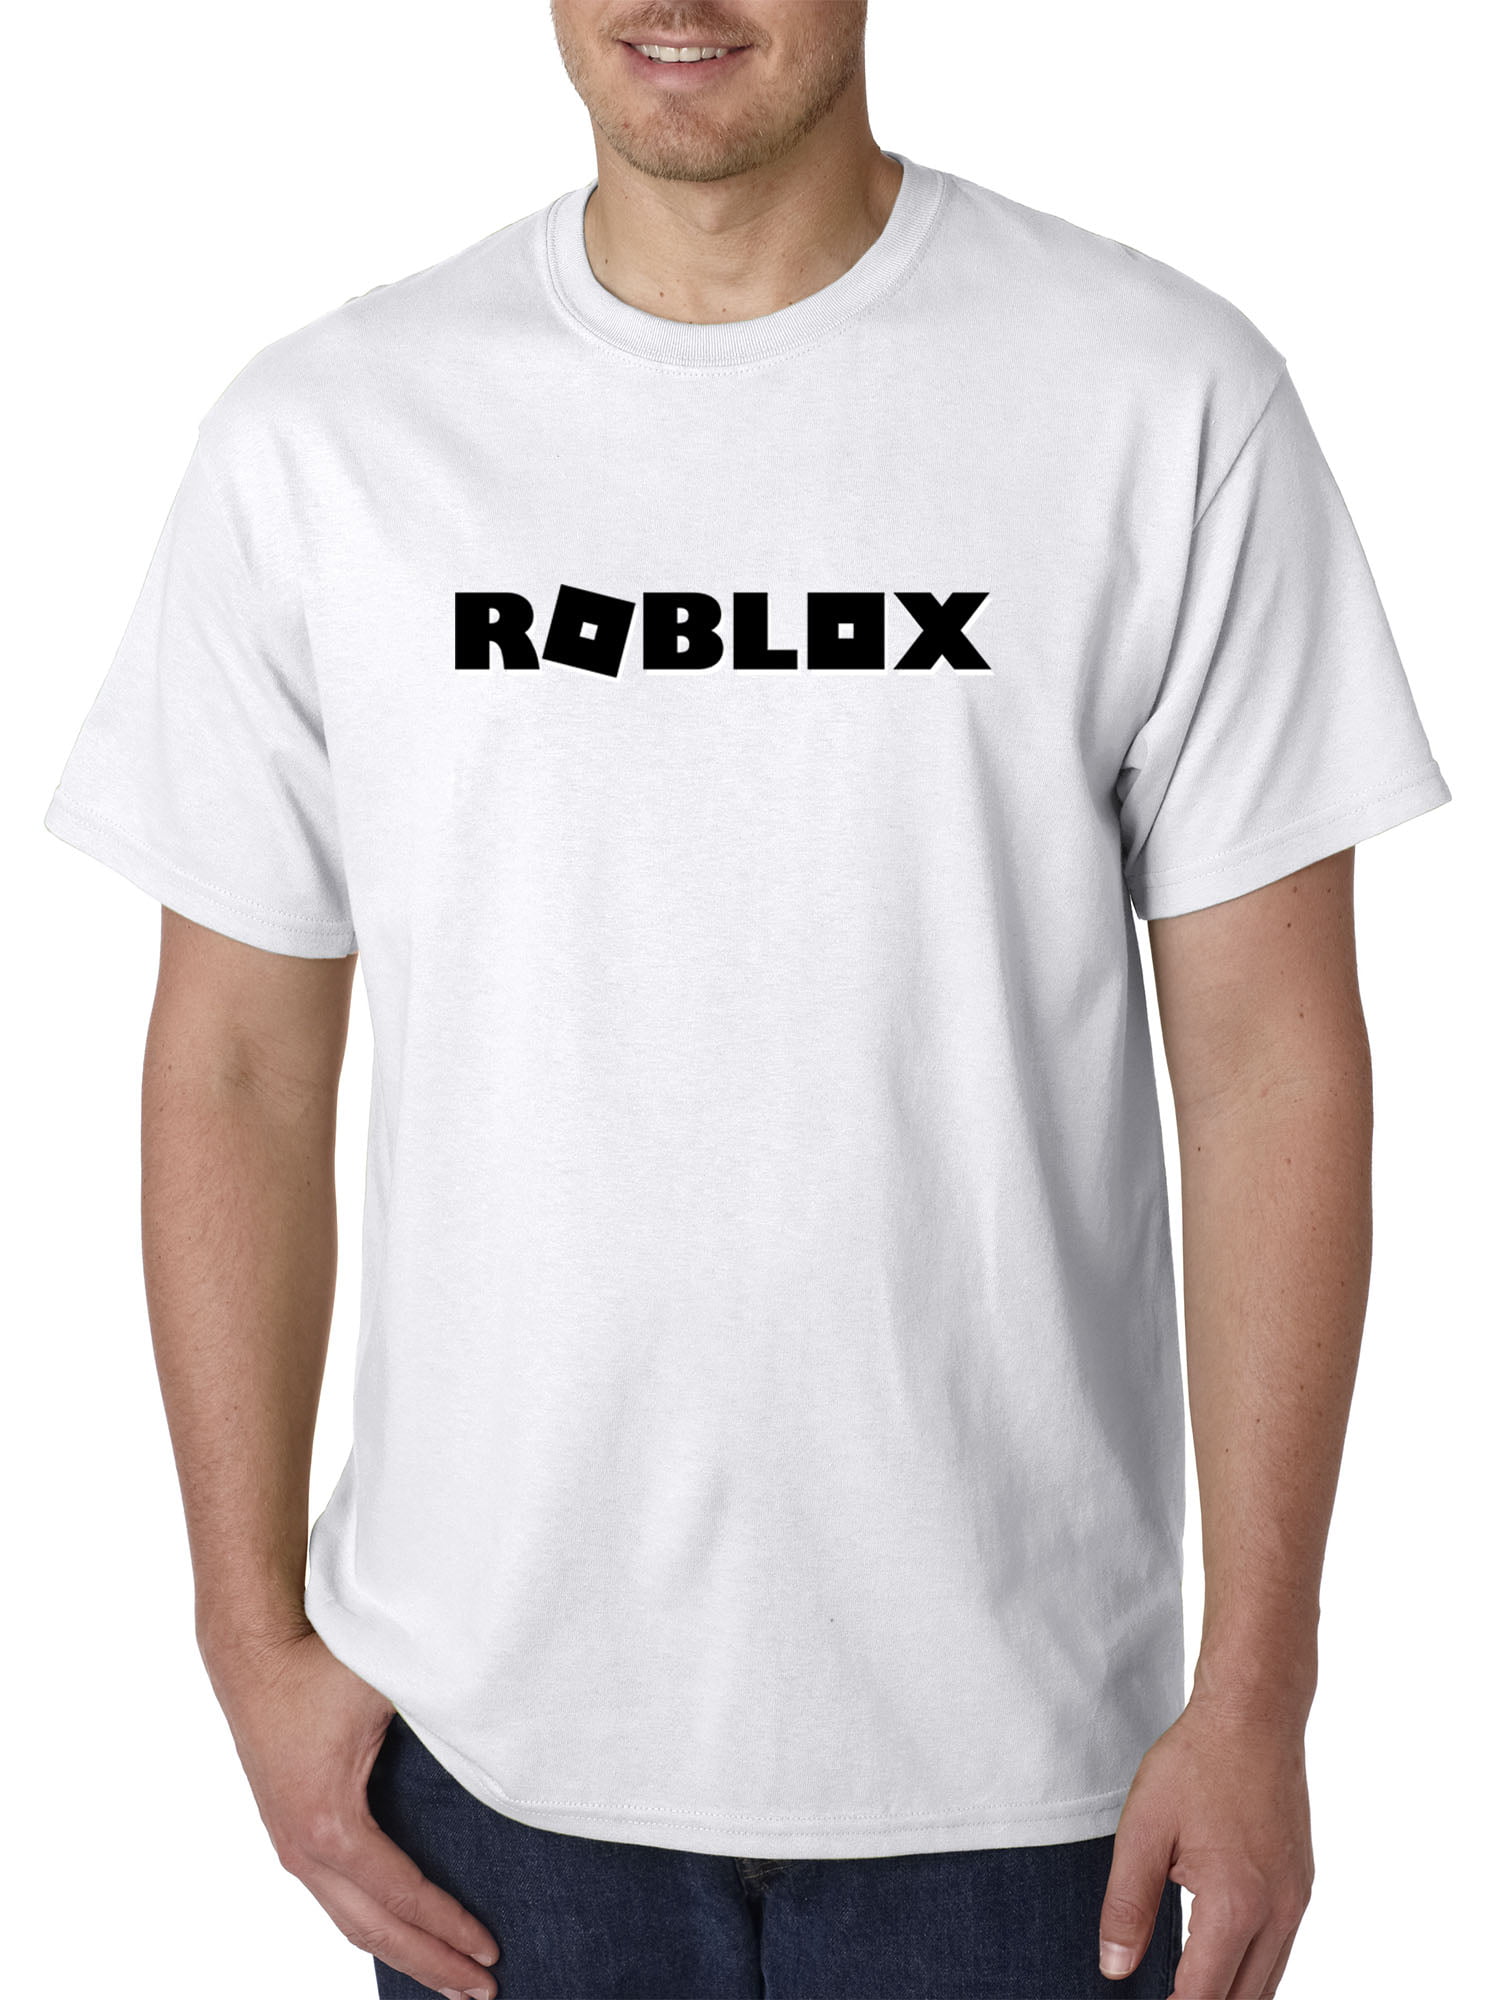 Trendy Usa Trendy Usa 1168 Unisex T Shirt Roblox Block Logo Game Accent 4xl White Walmart Com Walmart Com - white gucci shirt roblox